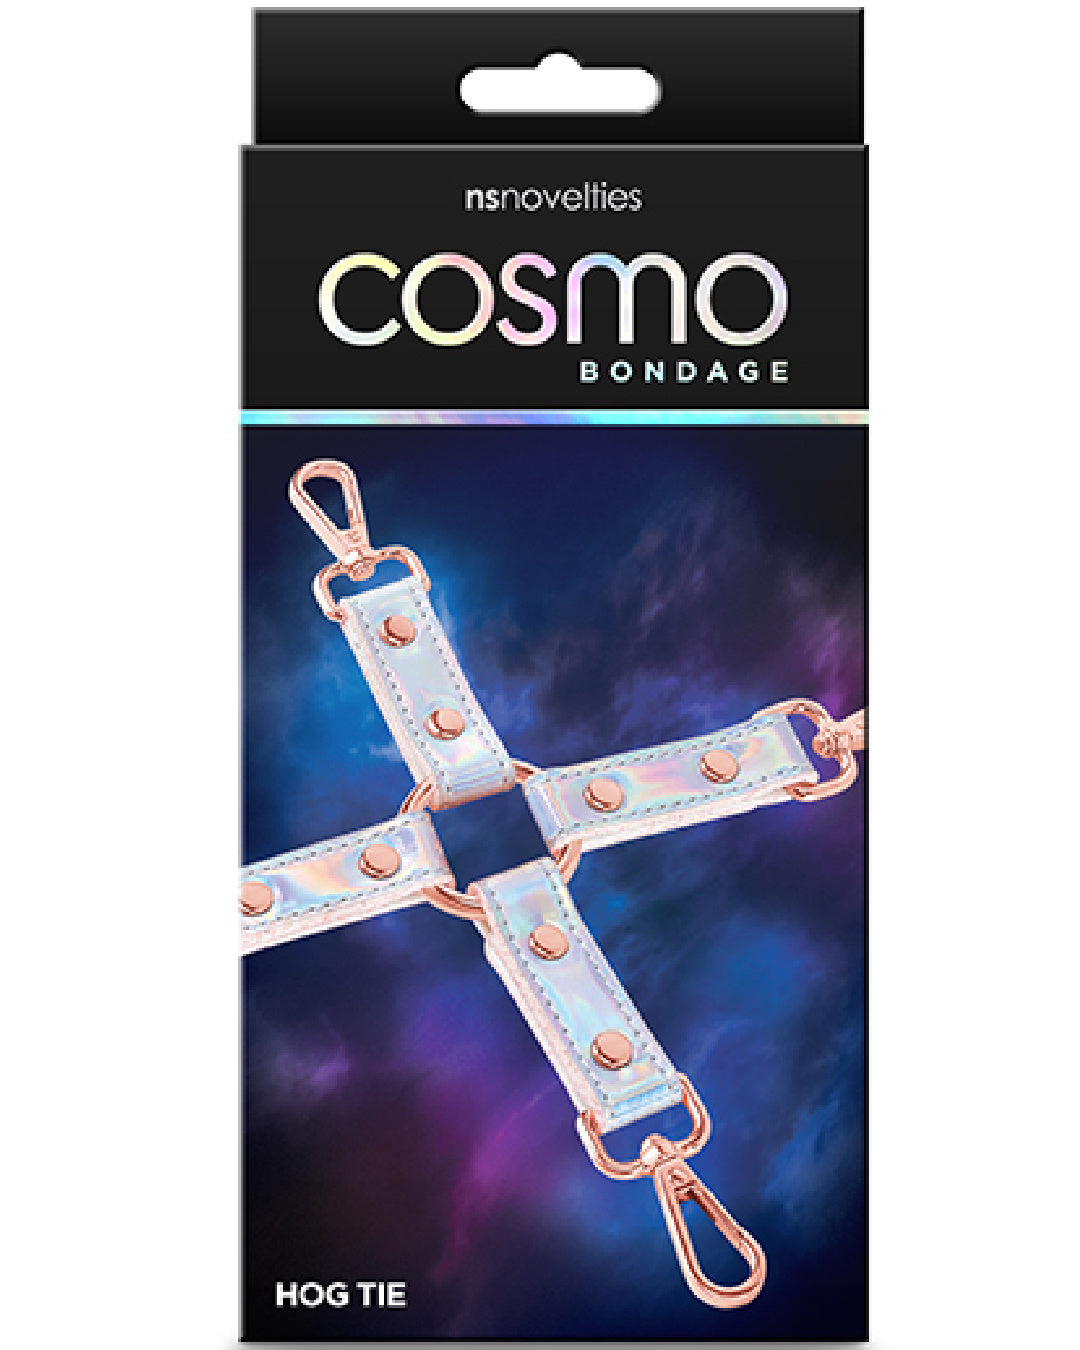 Cosmo Bondage Holographic Hog Tie Set product box 